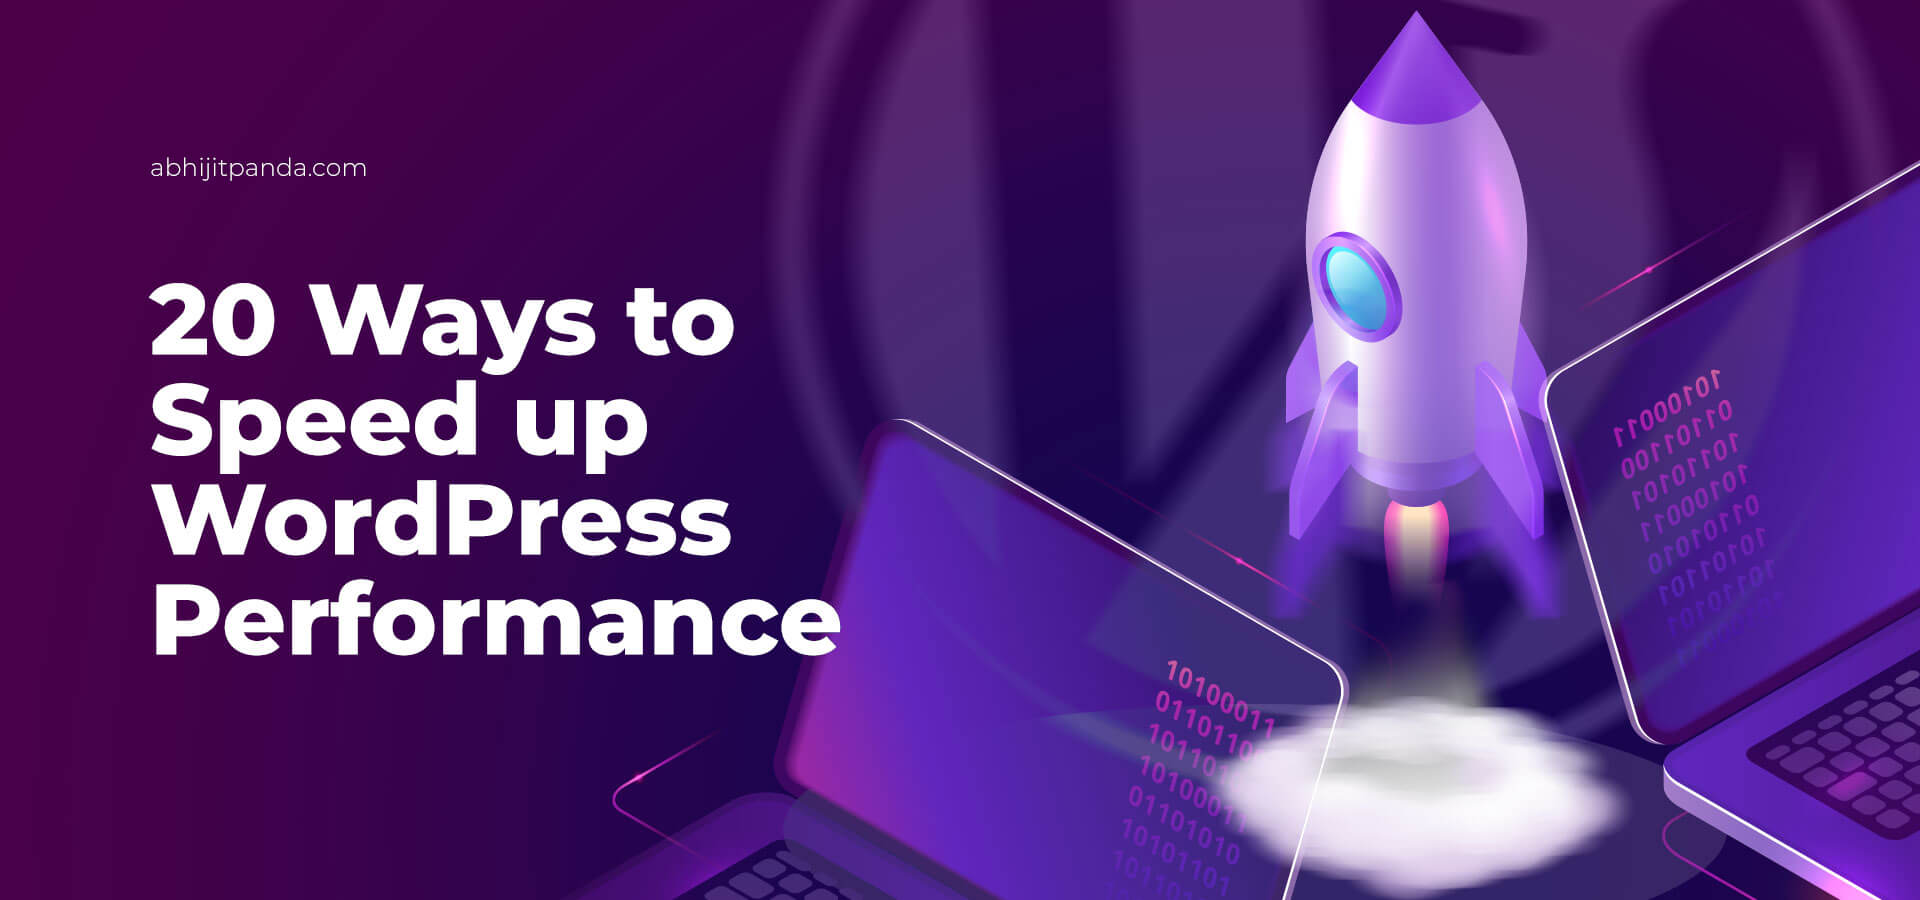 20 Ways to Speed up WordPress Performance